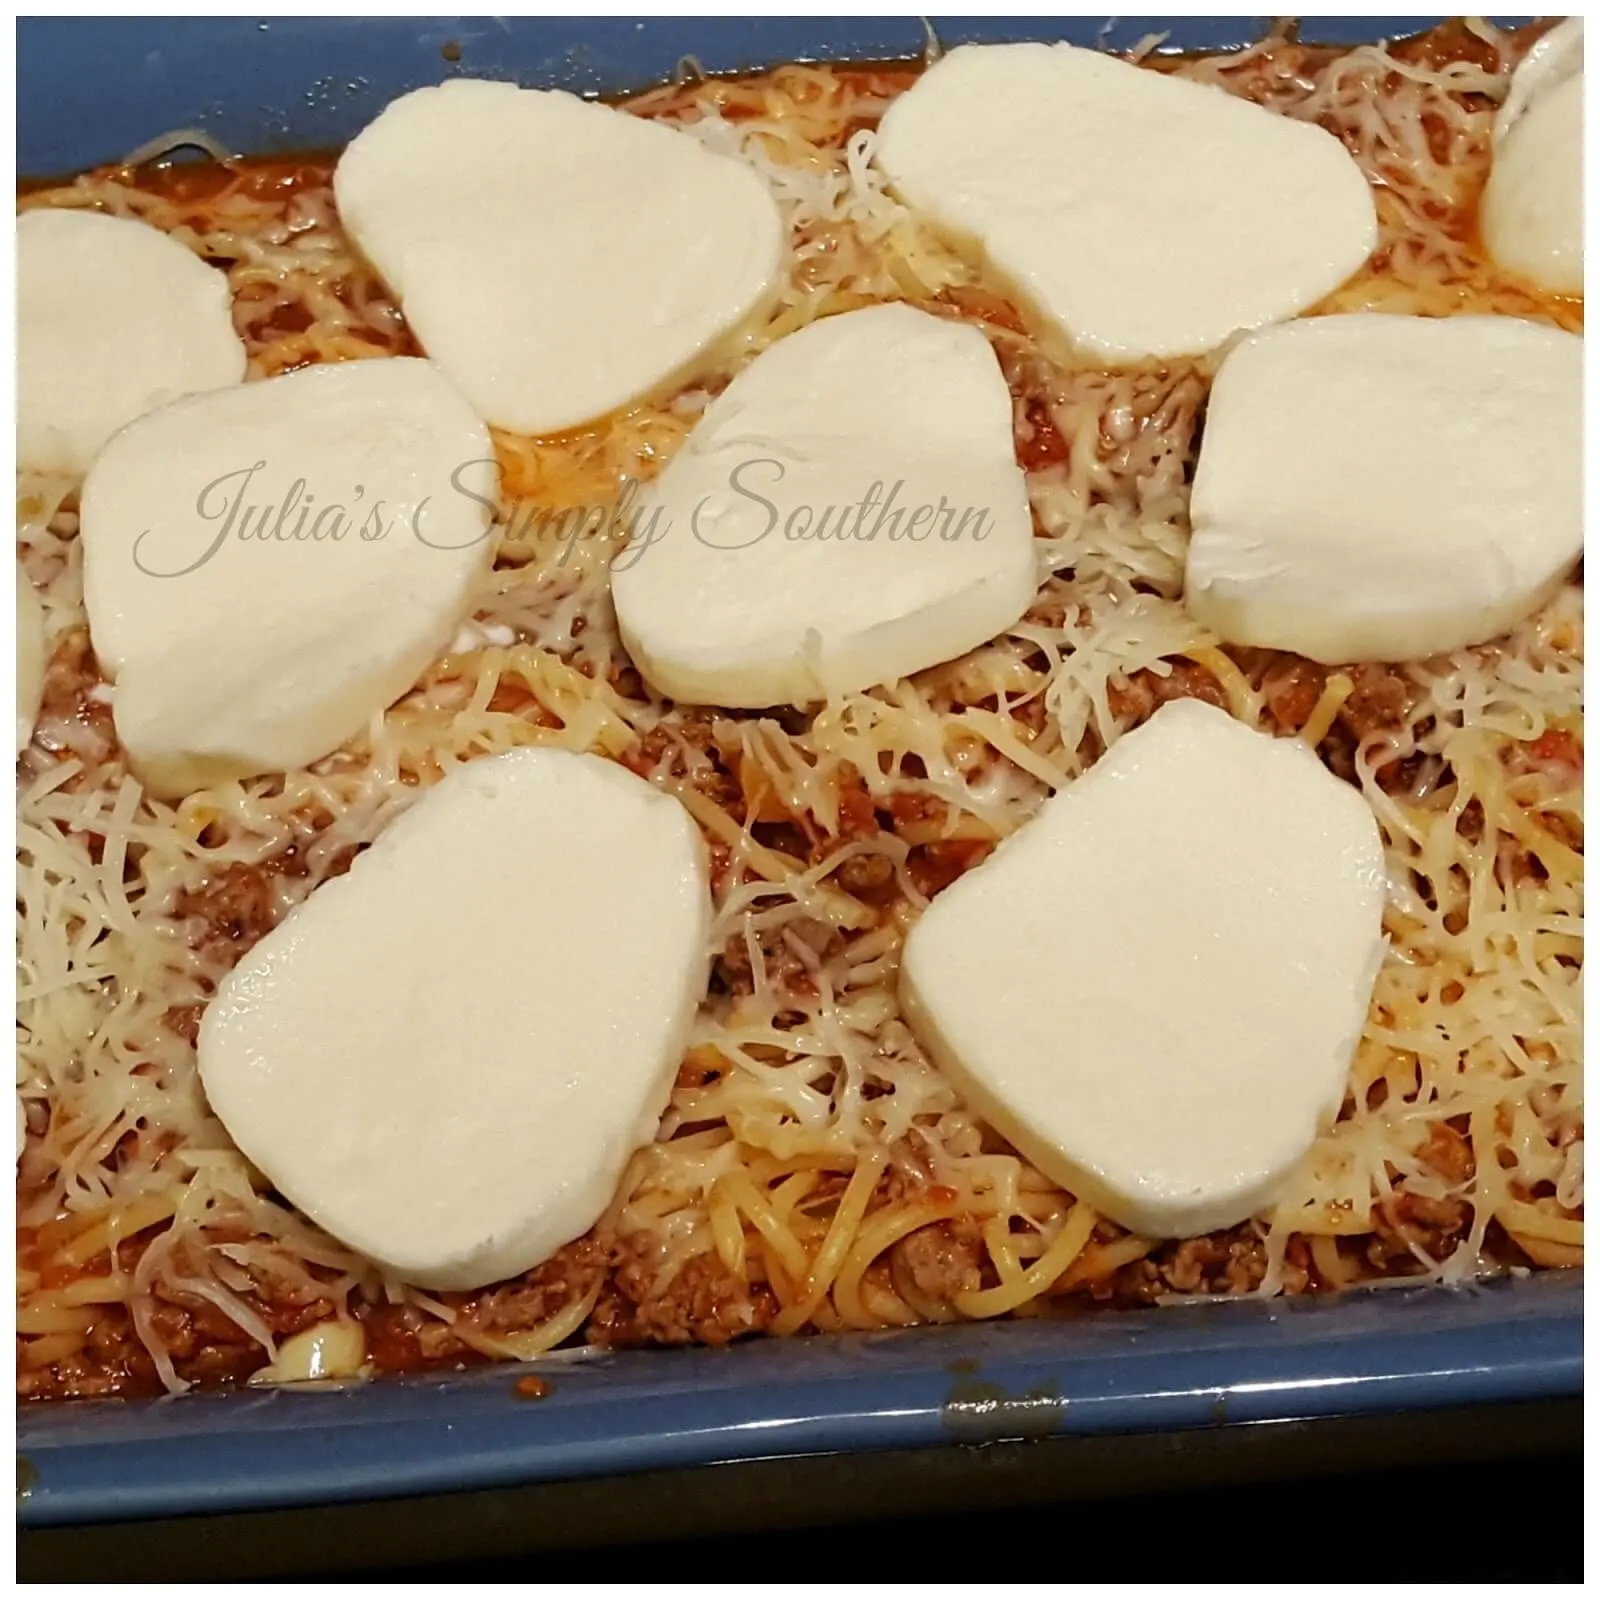 mozzarella slices ton top of baked spaghetti casserole